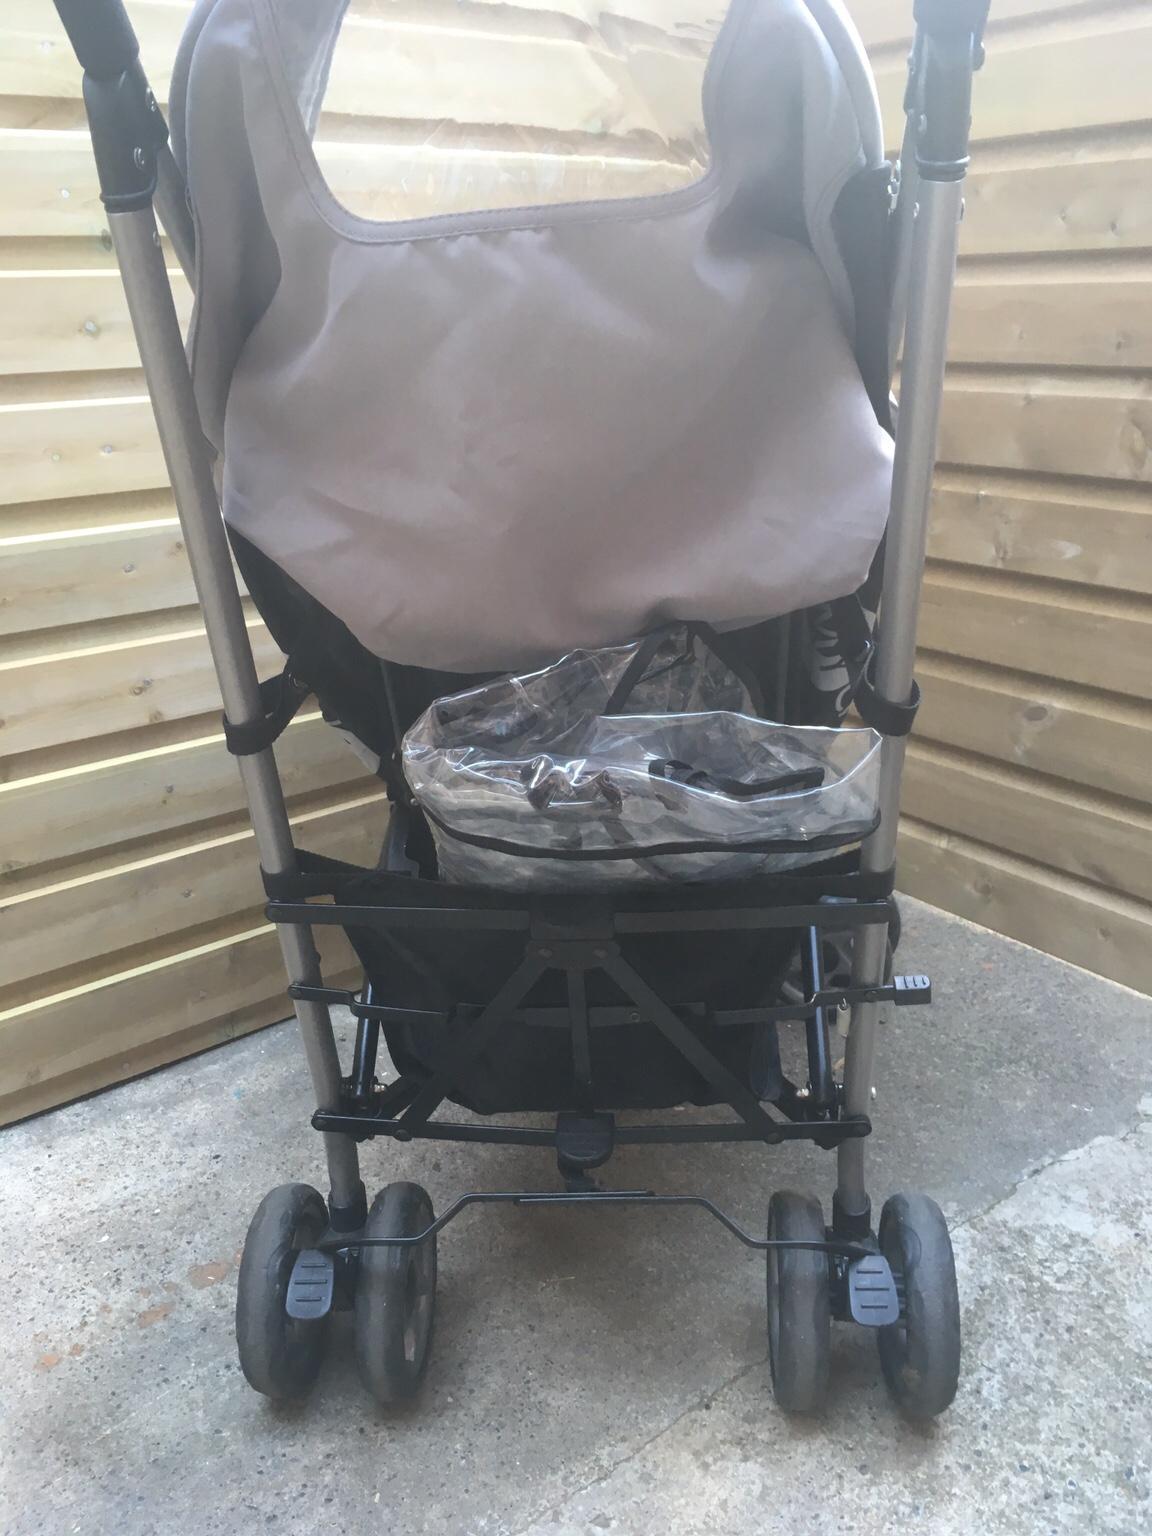 my child nimbus stroller